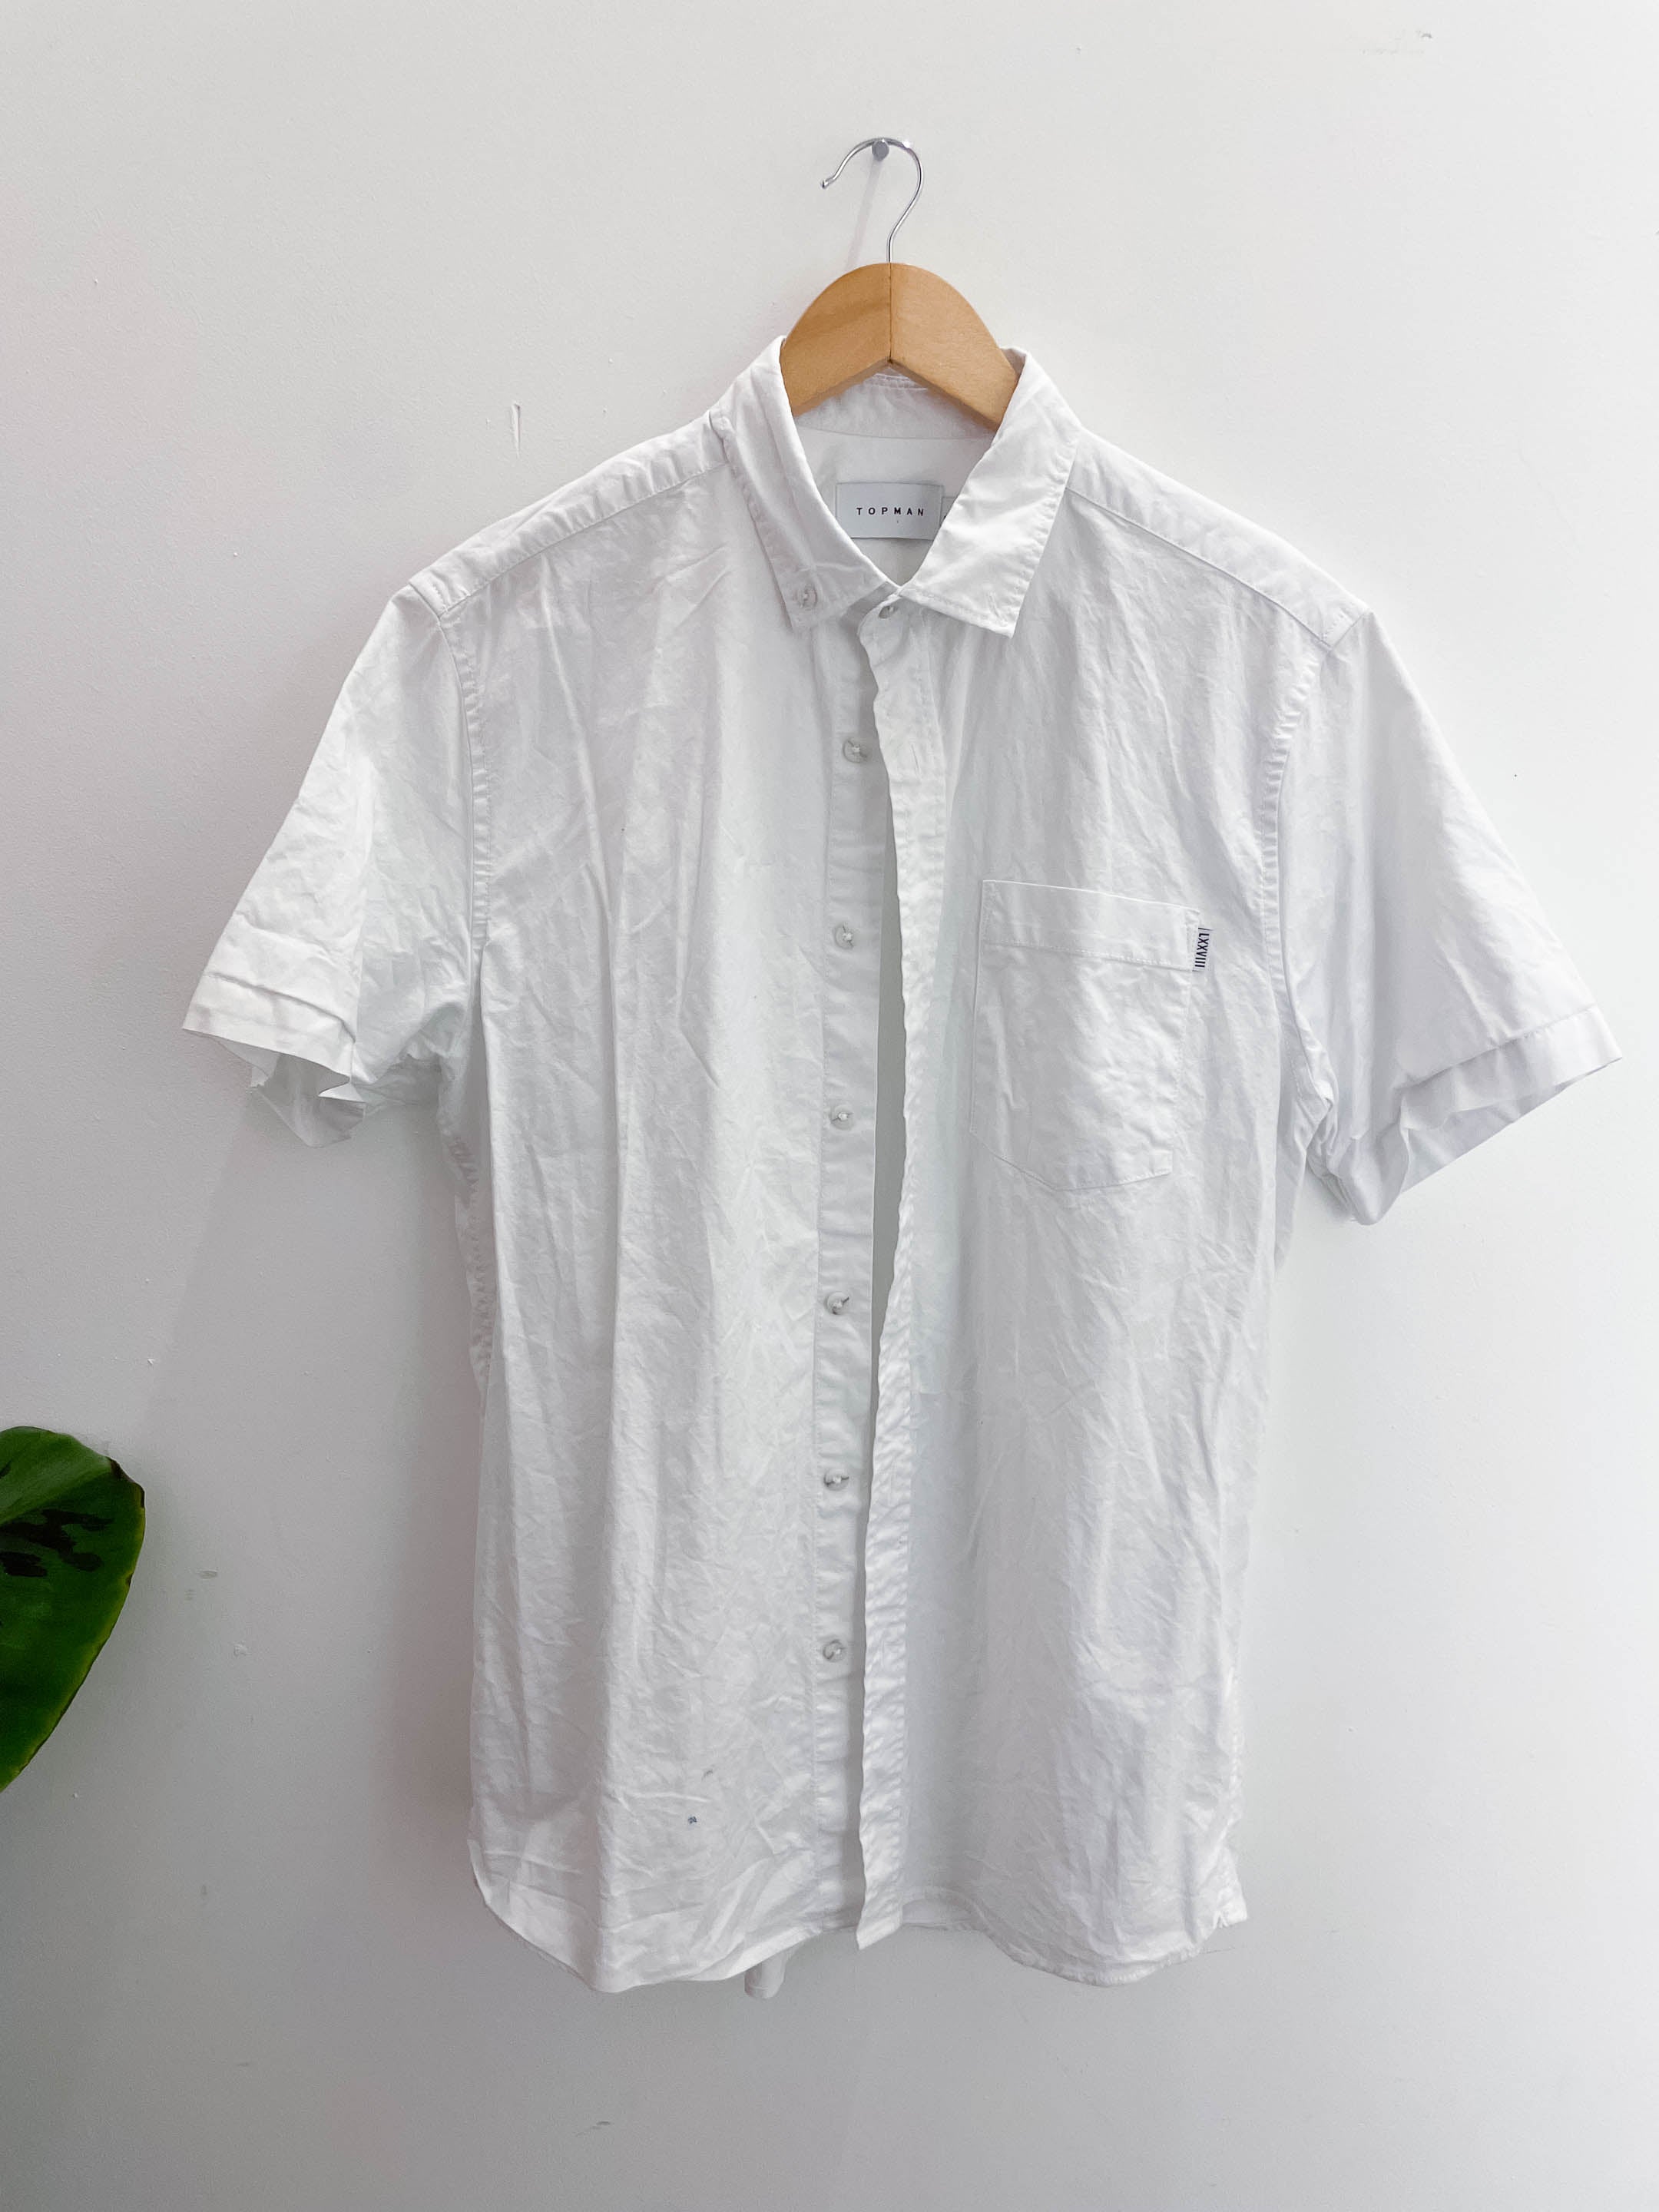 Vintage white topman short sleeve shirt size M